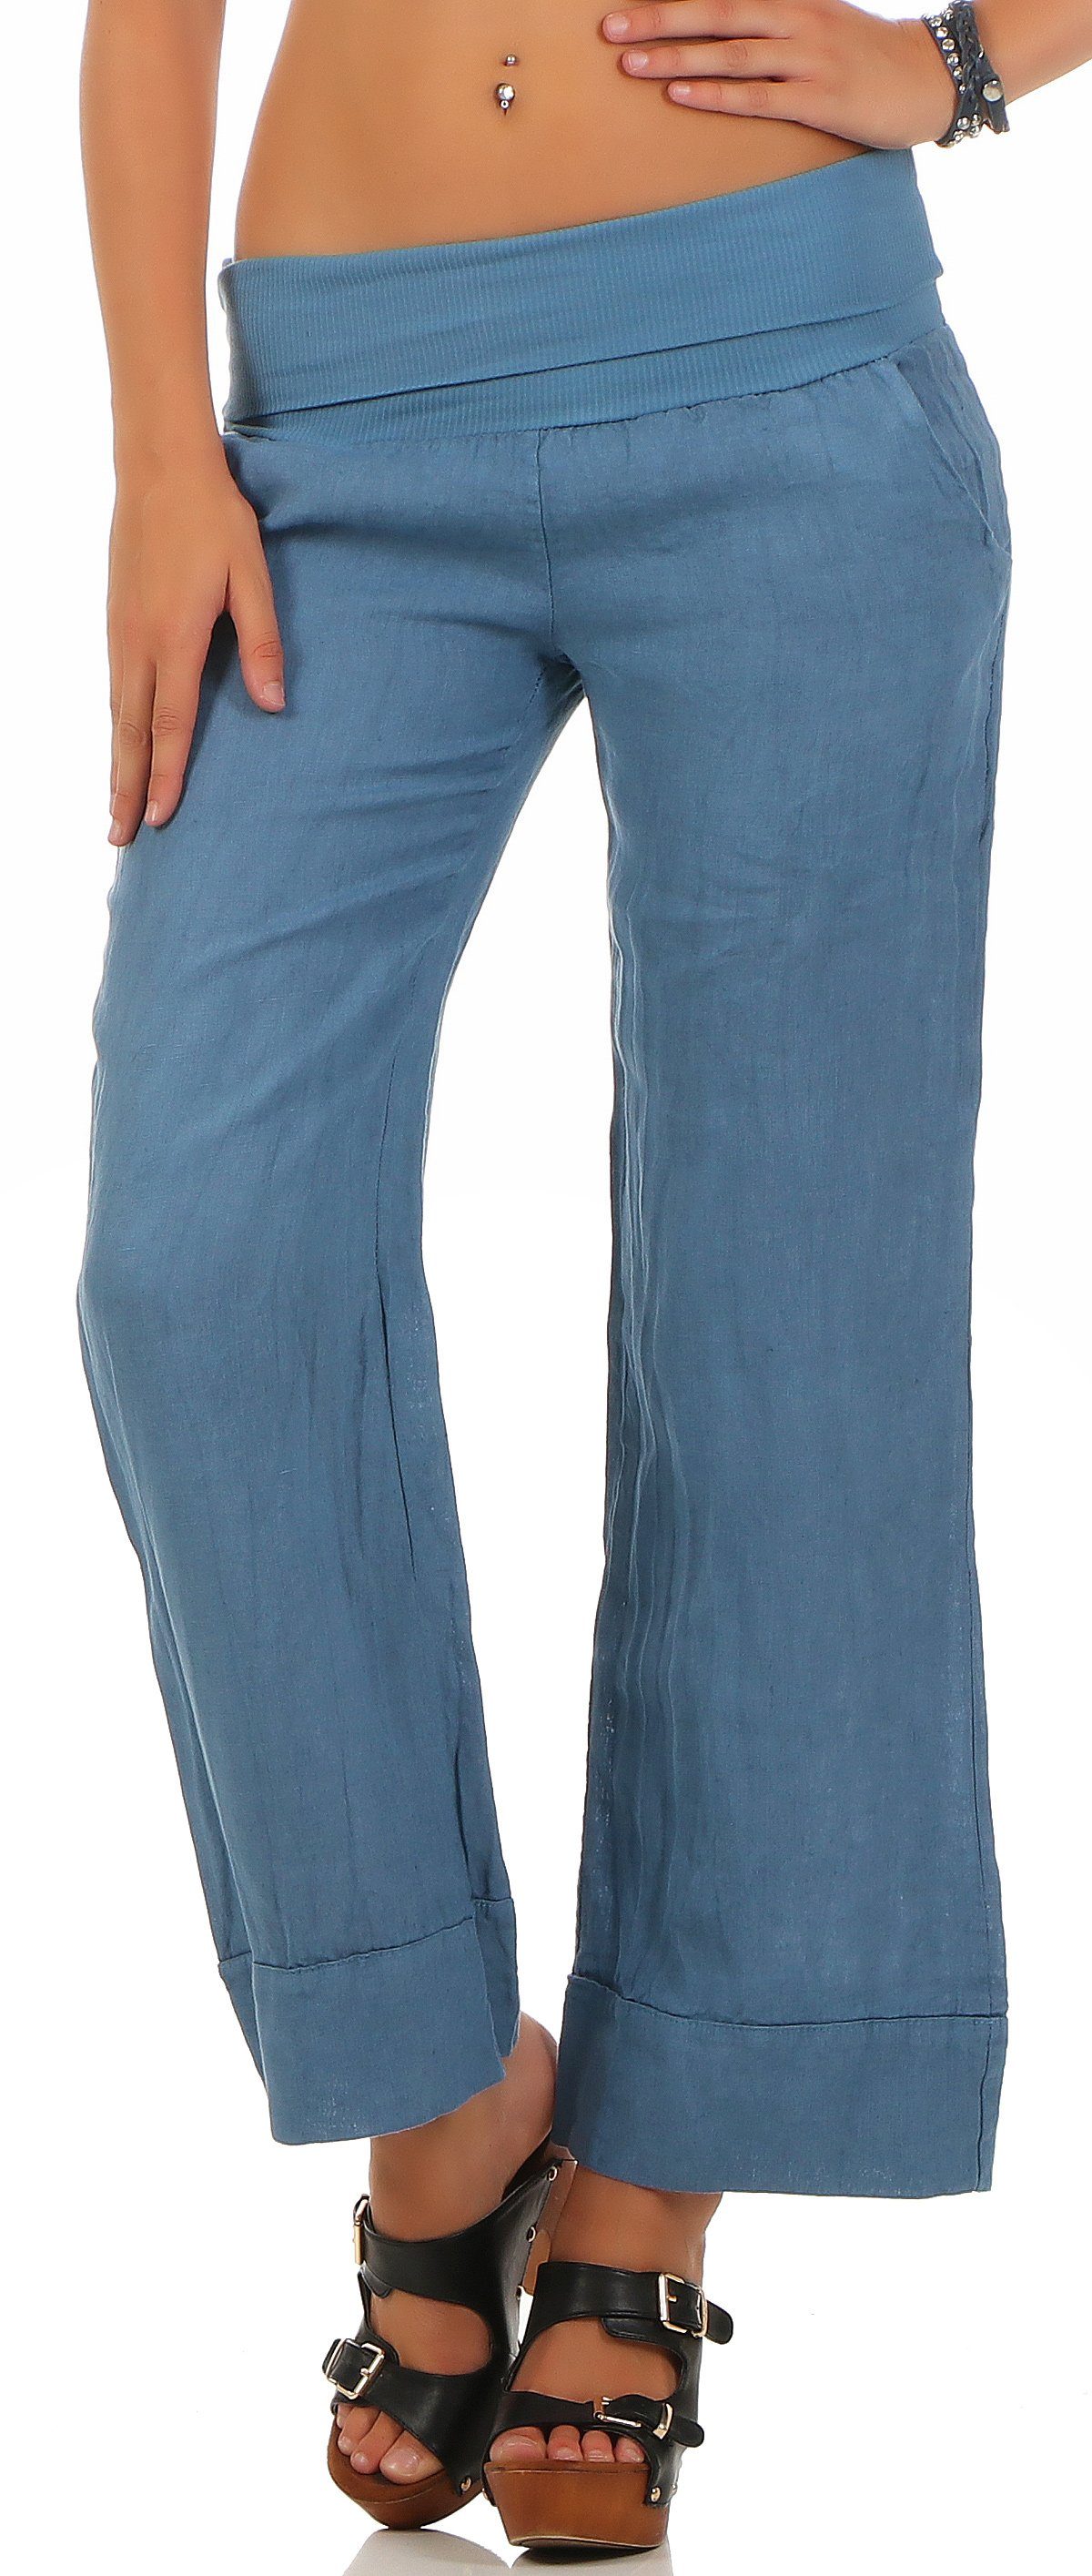 Großhandelspreis von malito more jeansblau Hose Casual Leinen 8064 Leinenhose fashion than